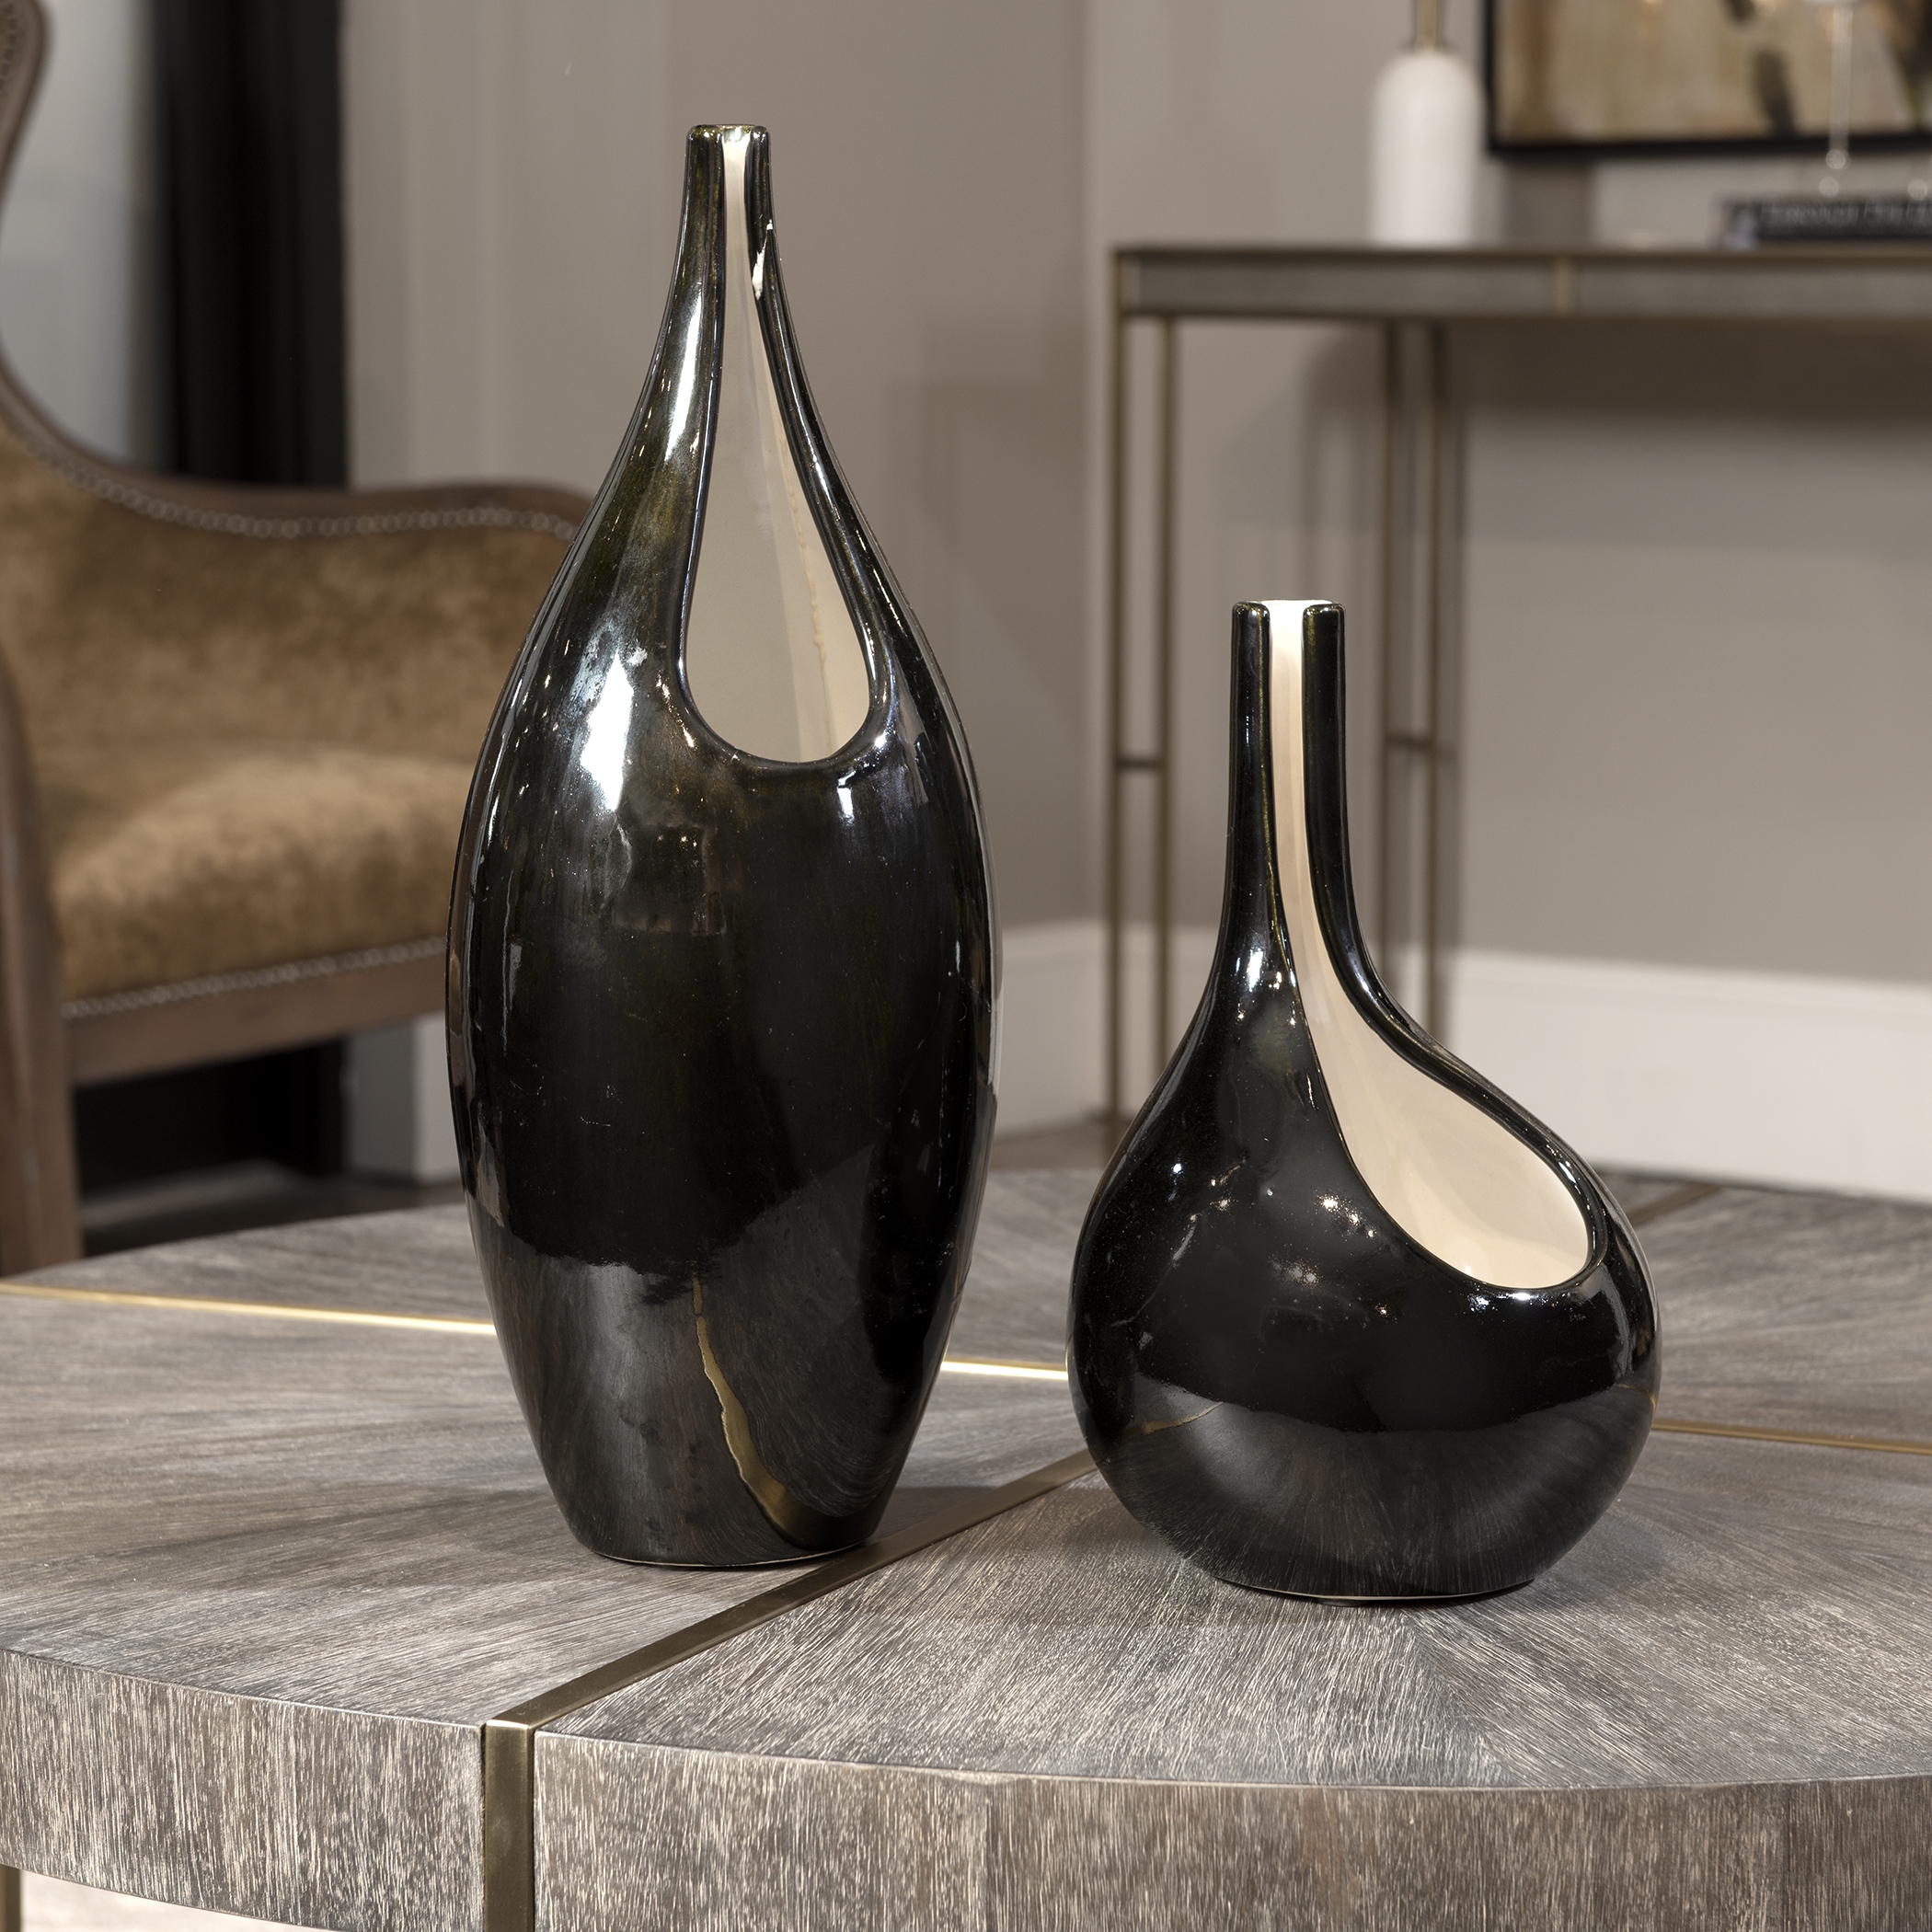 Lockwood Modern Vases, S/2 - Image 0